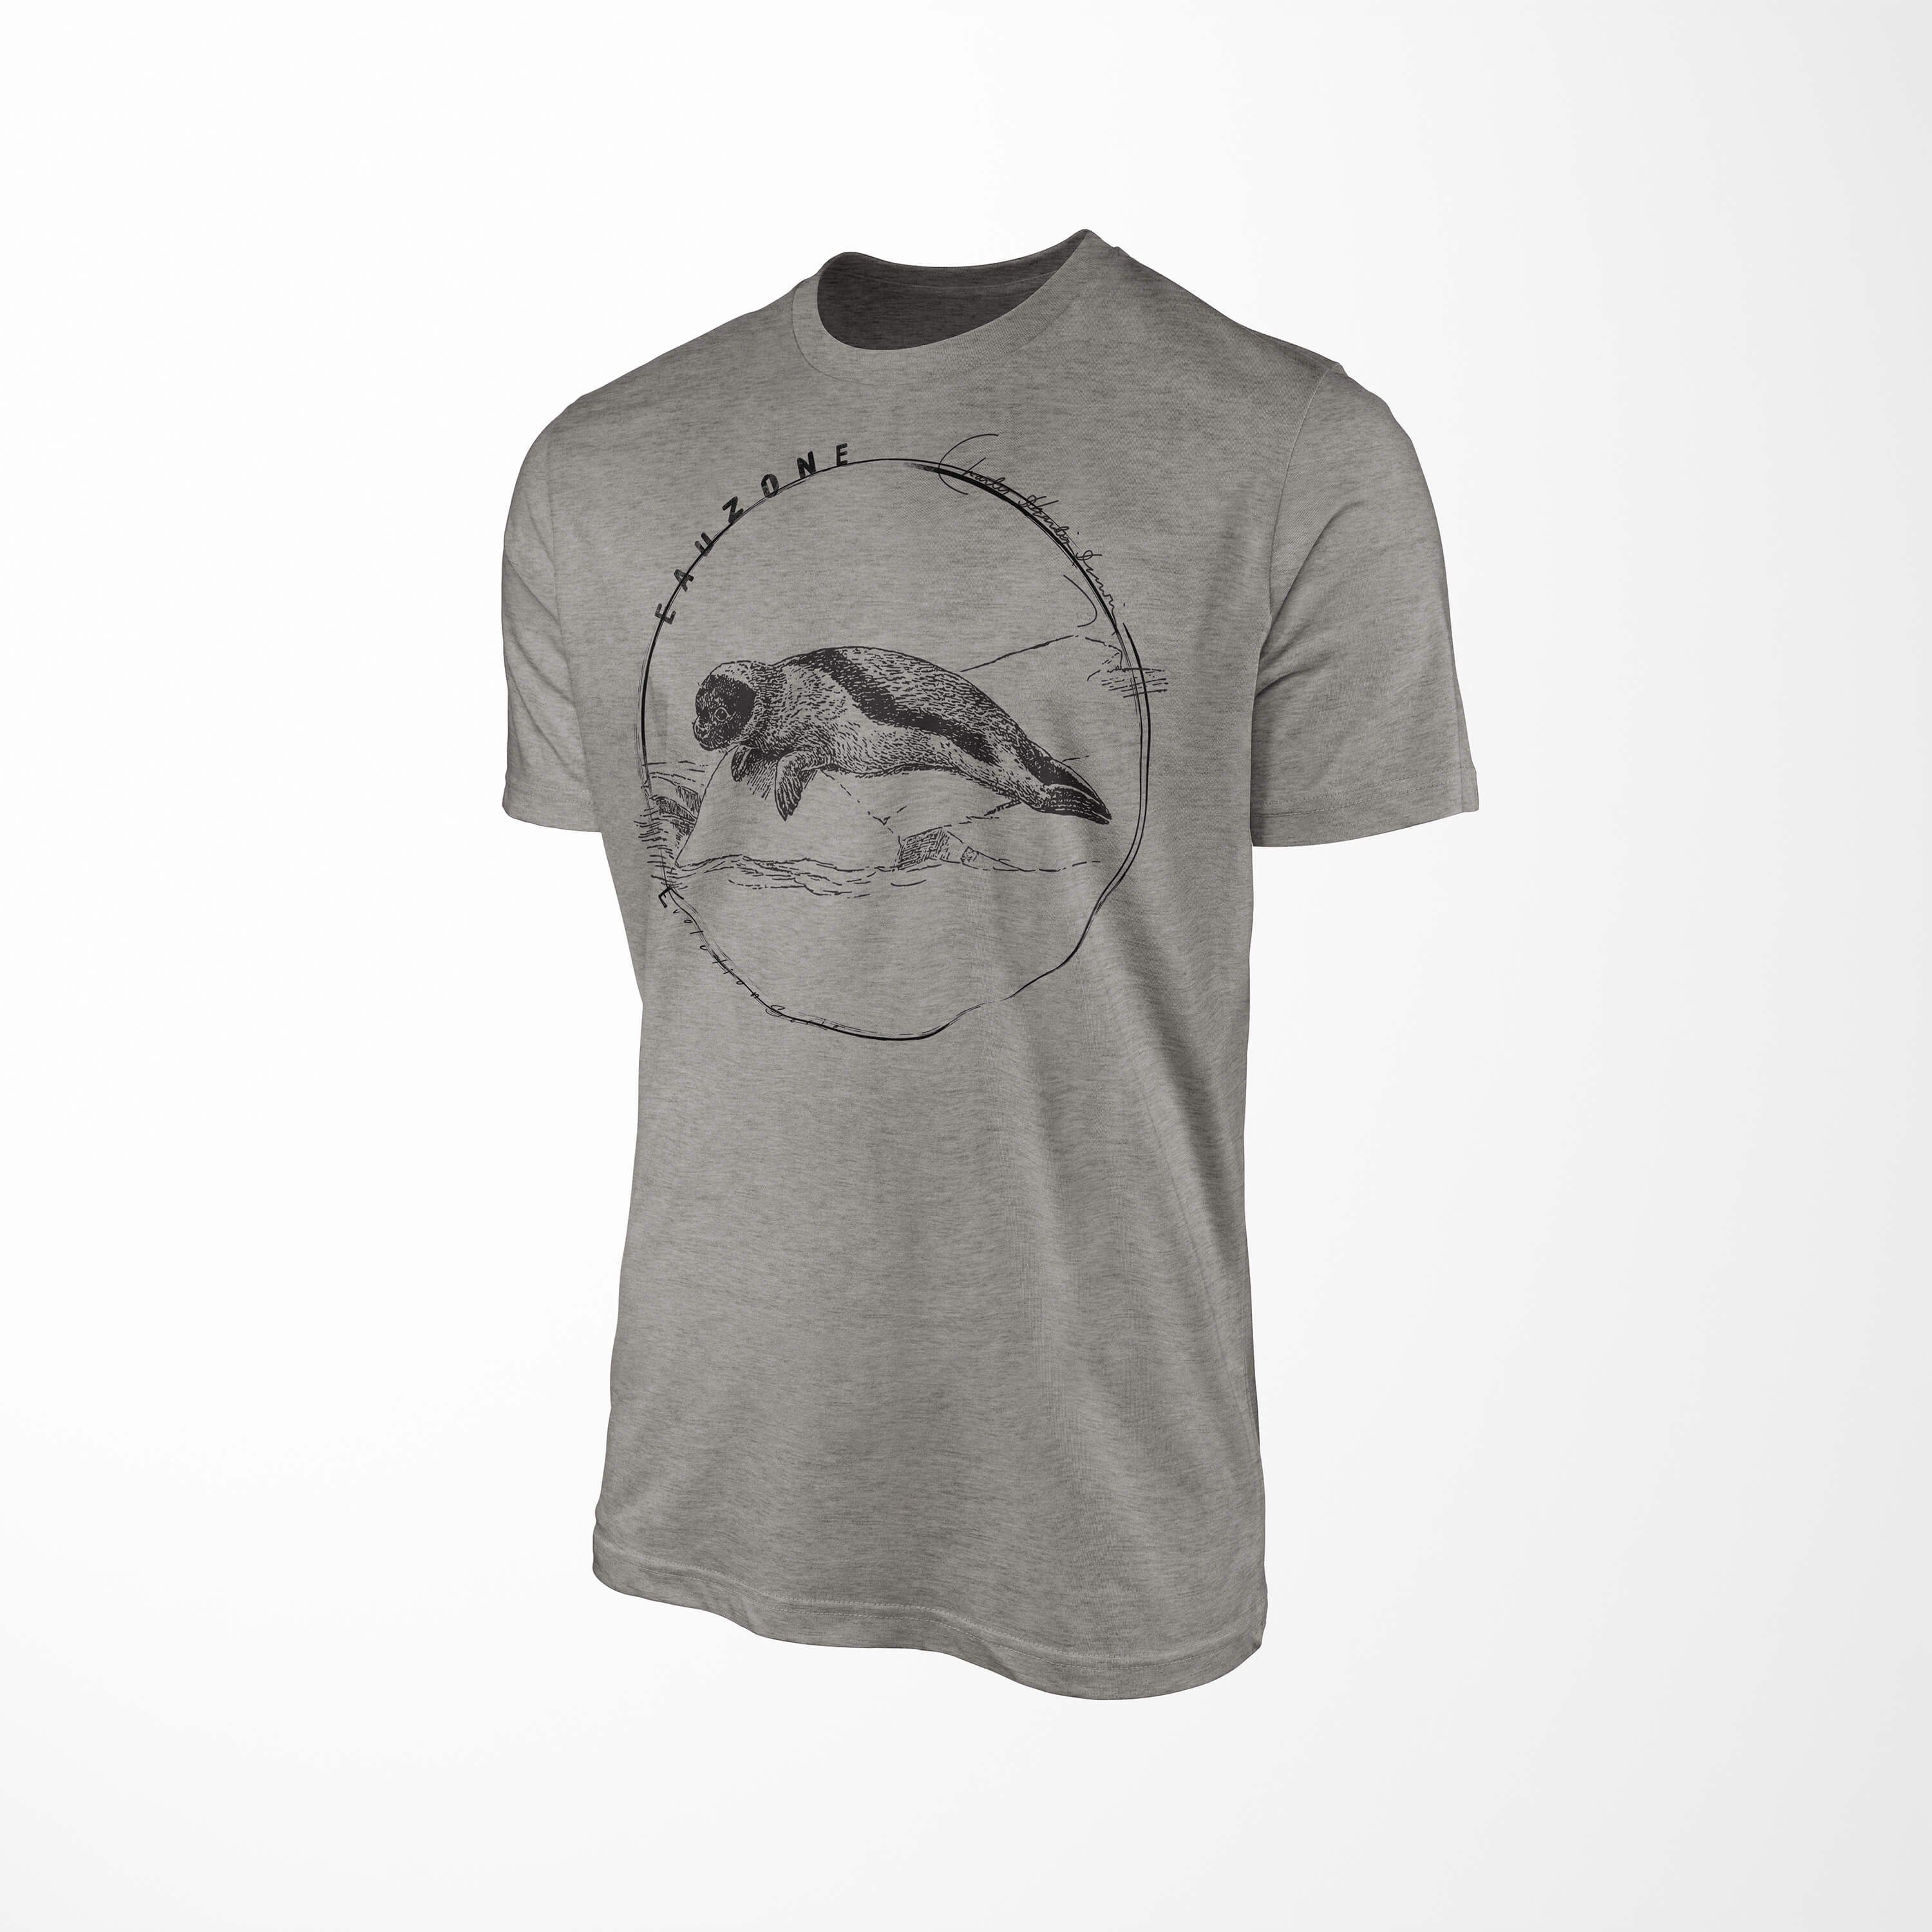 T-Shirt Robbe Art Sinus Ash T-Shirt Herren Evolution